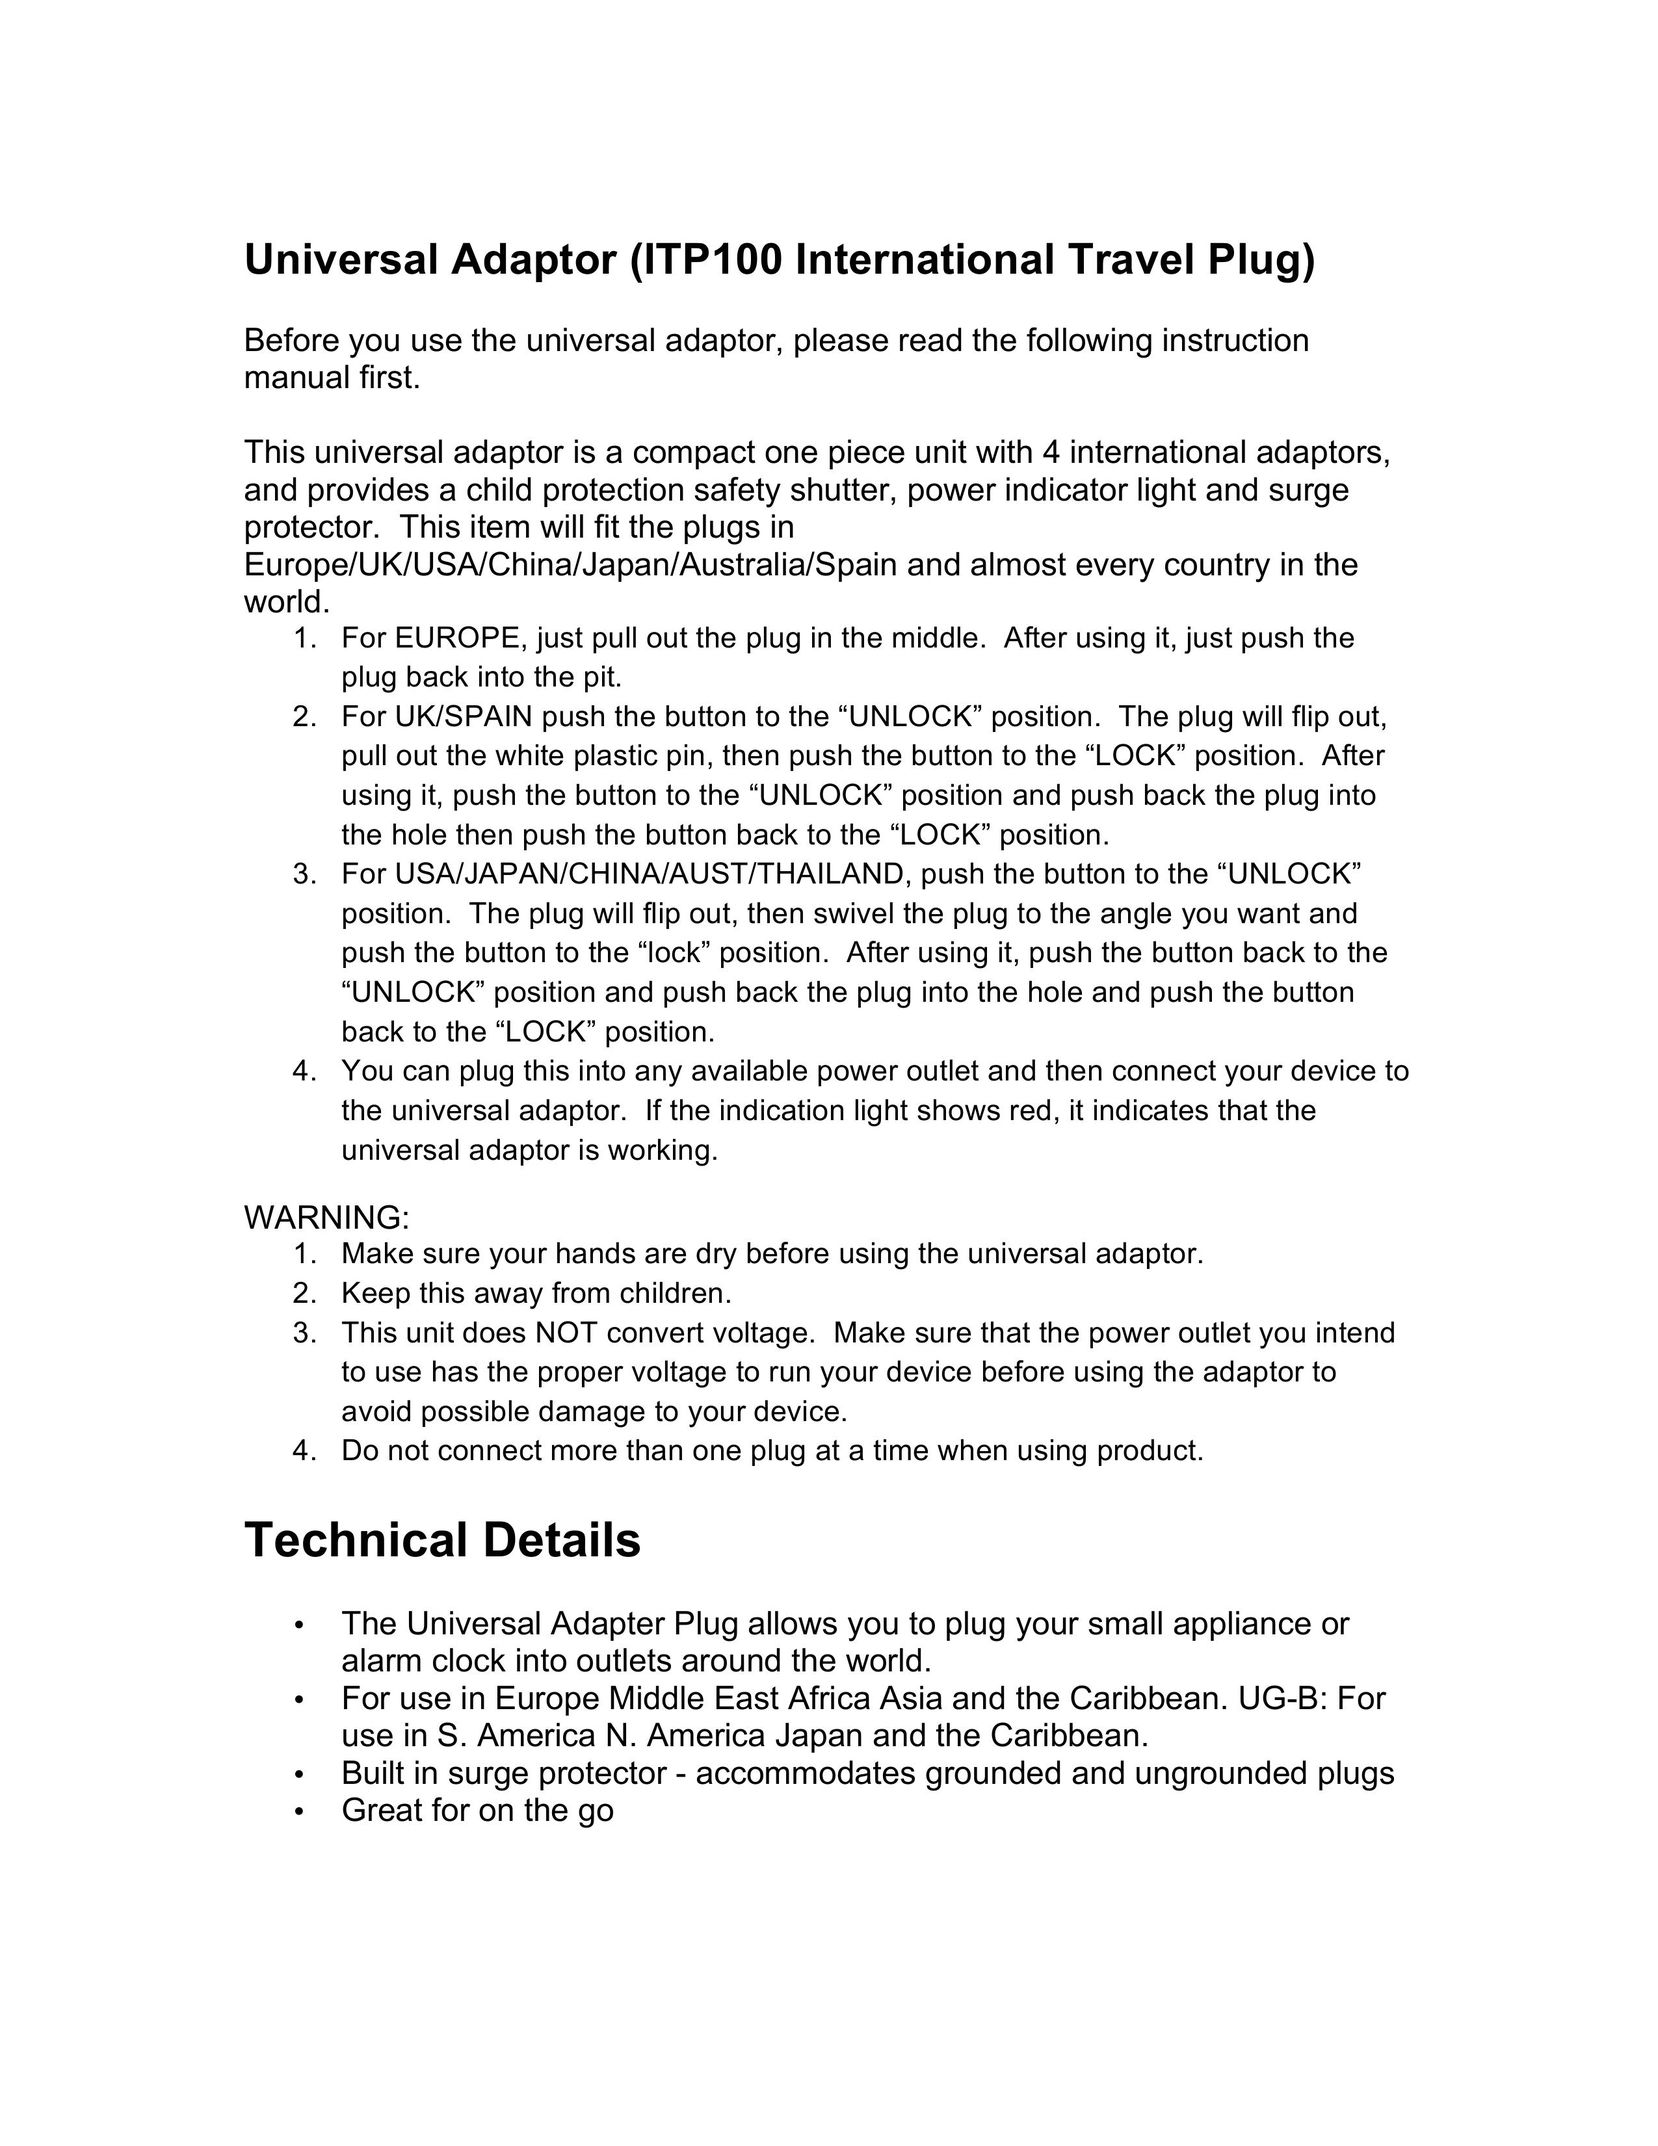 Universal Electronics ITP100 Universal Remote User Manual